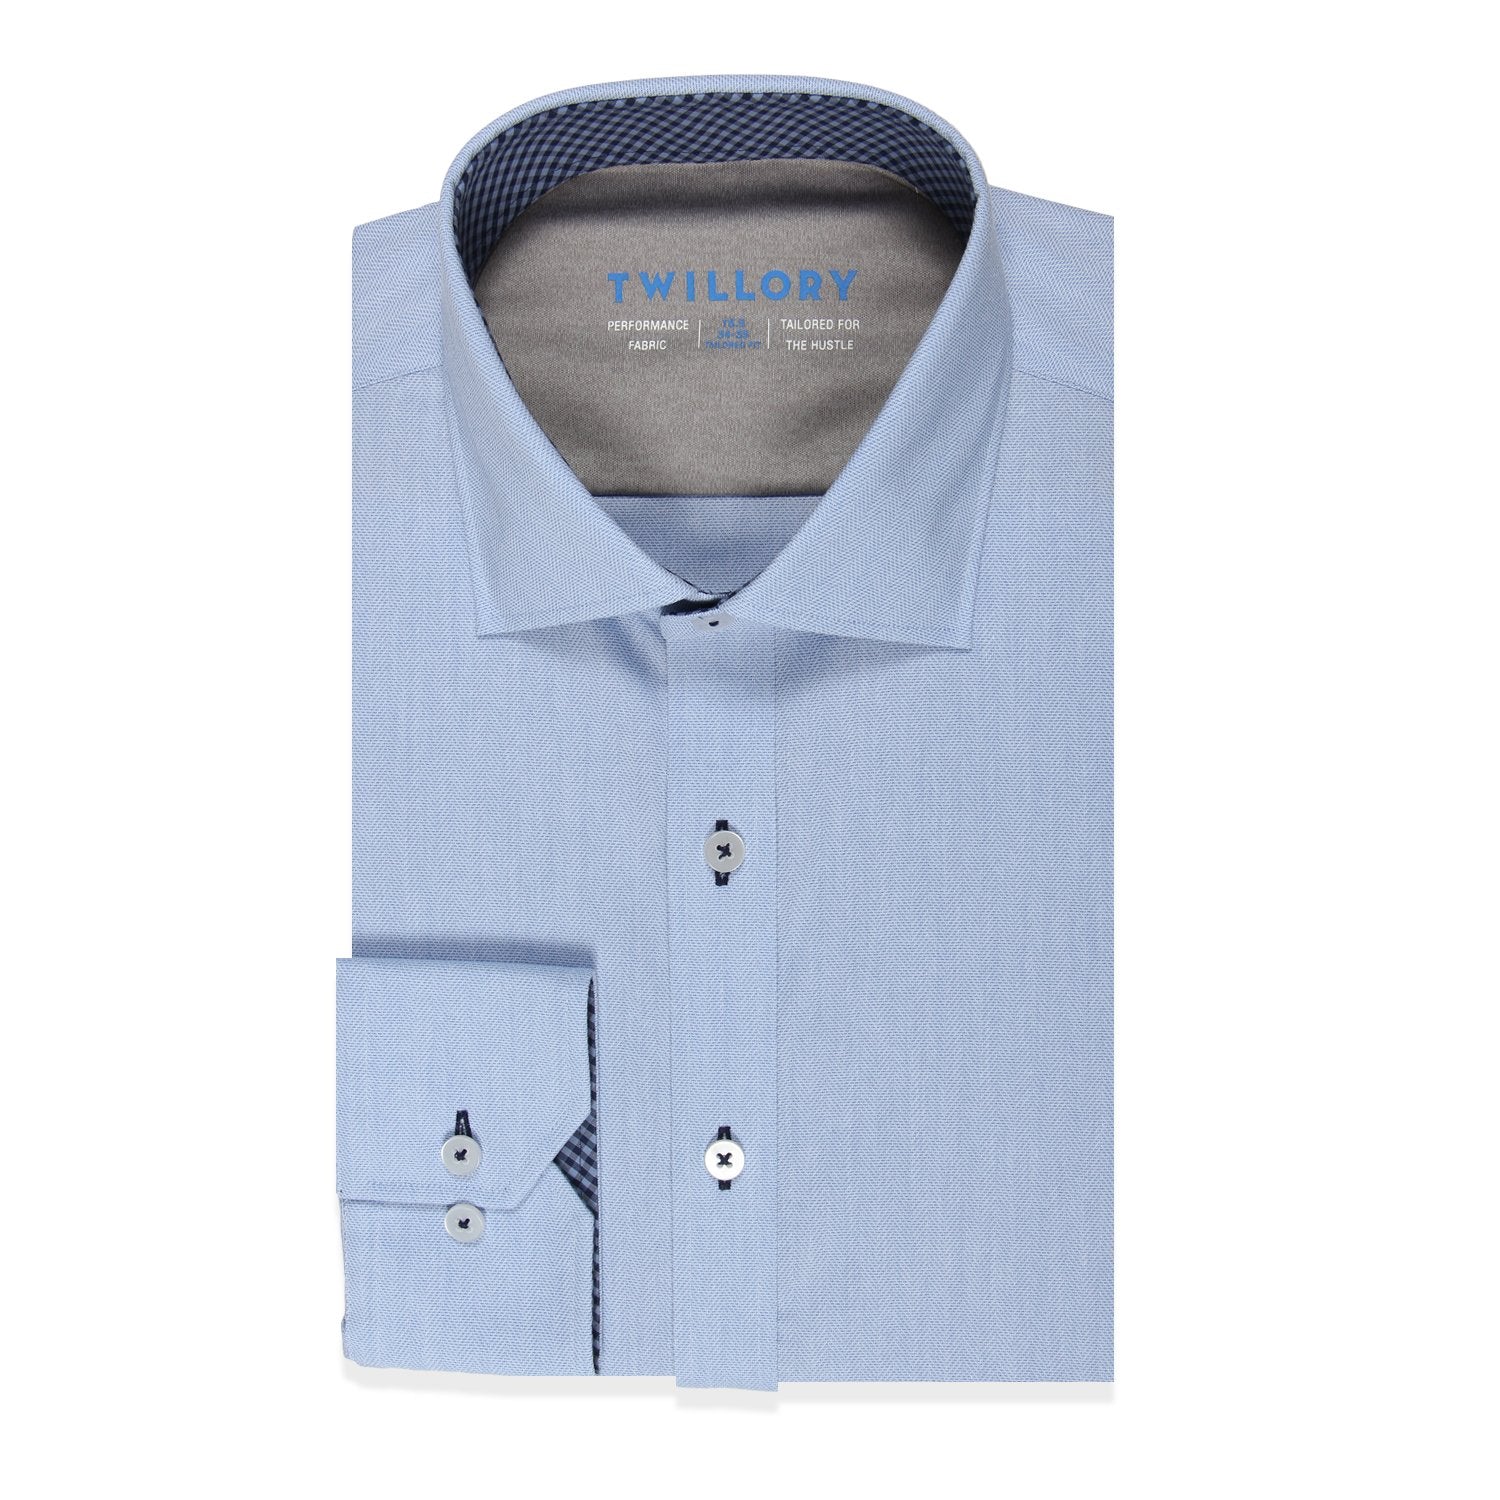 WUSI 36pcs Collar Stays for Men's Dress Shirts & Polos. Fashion